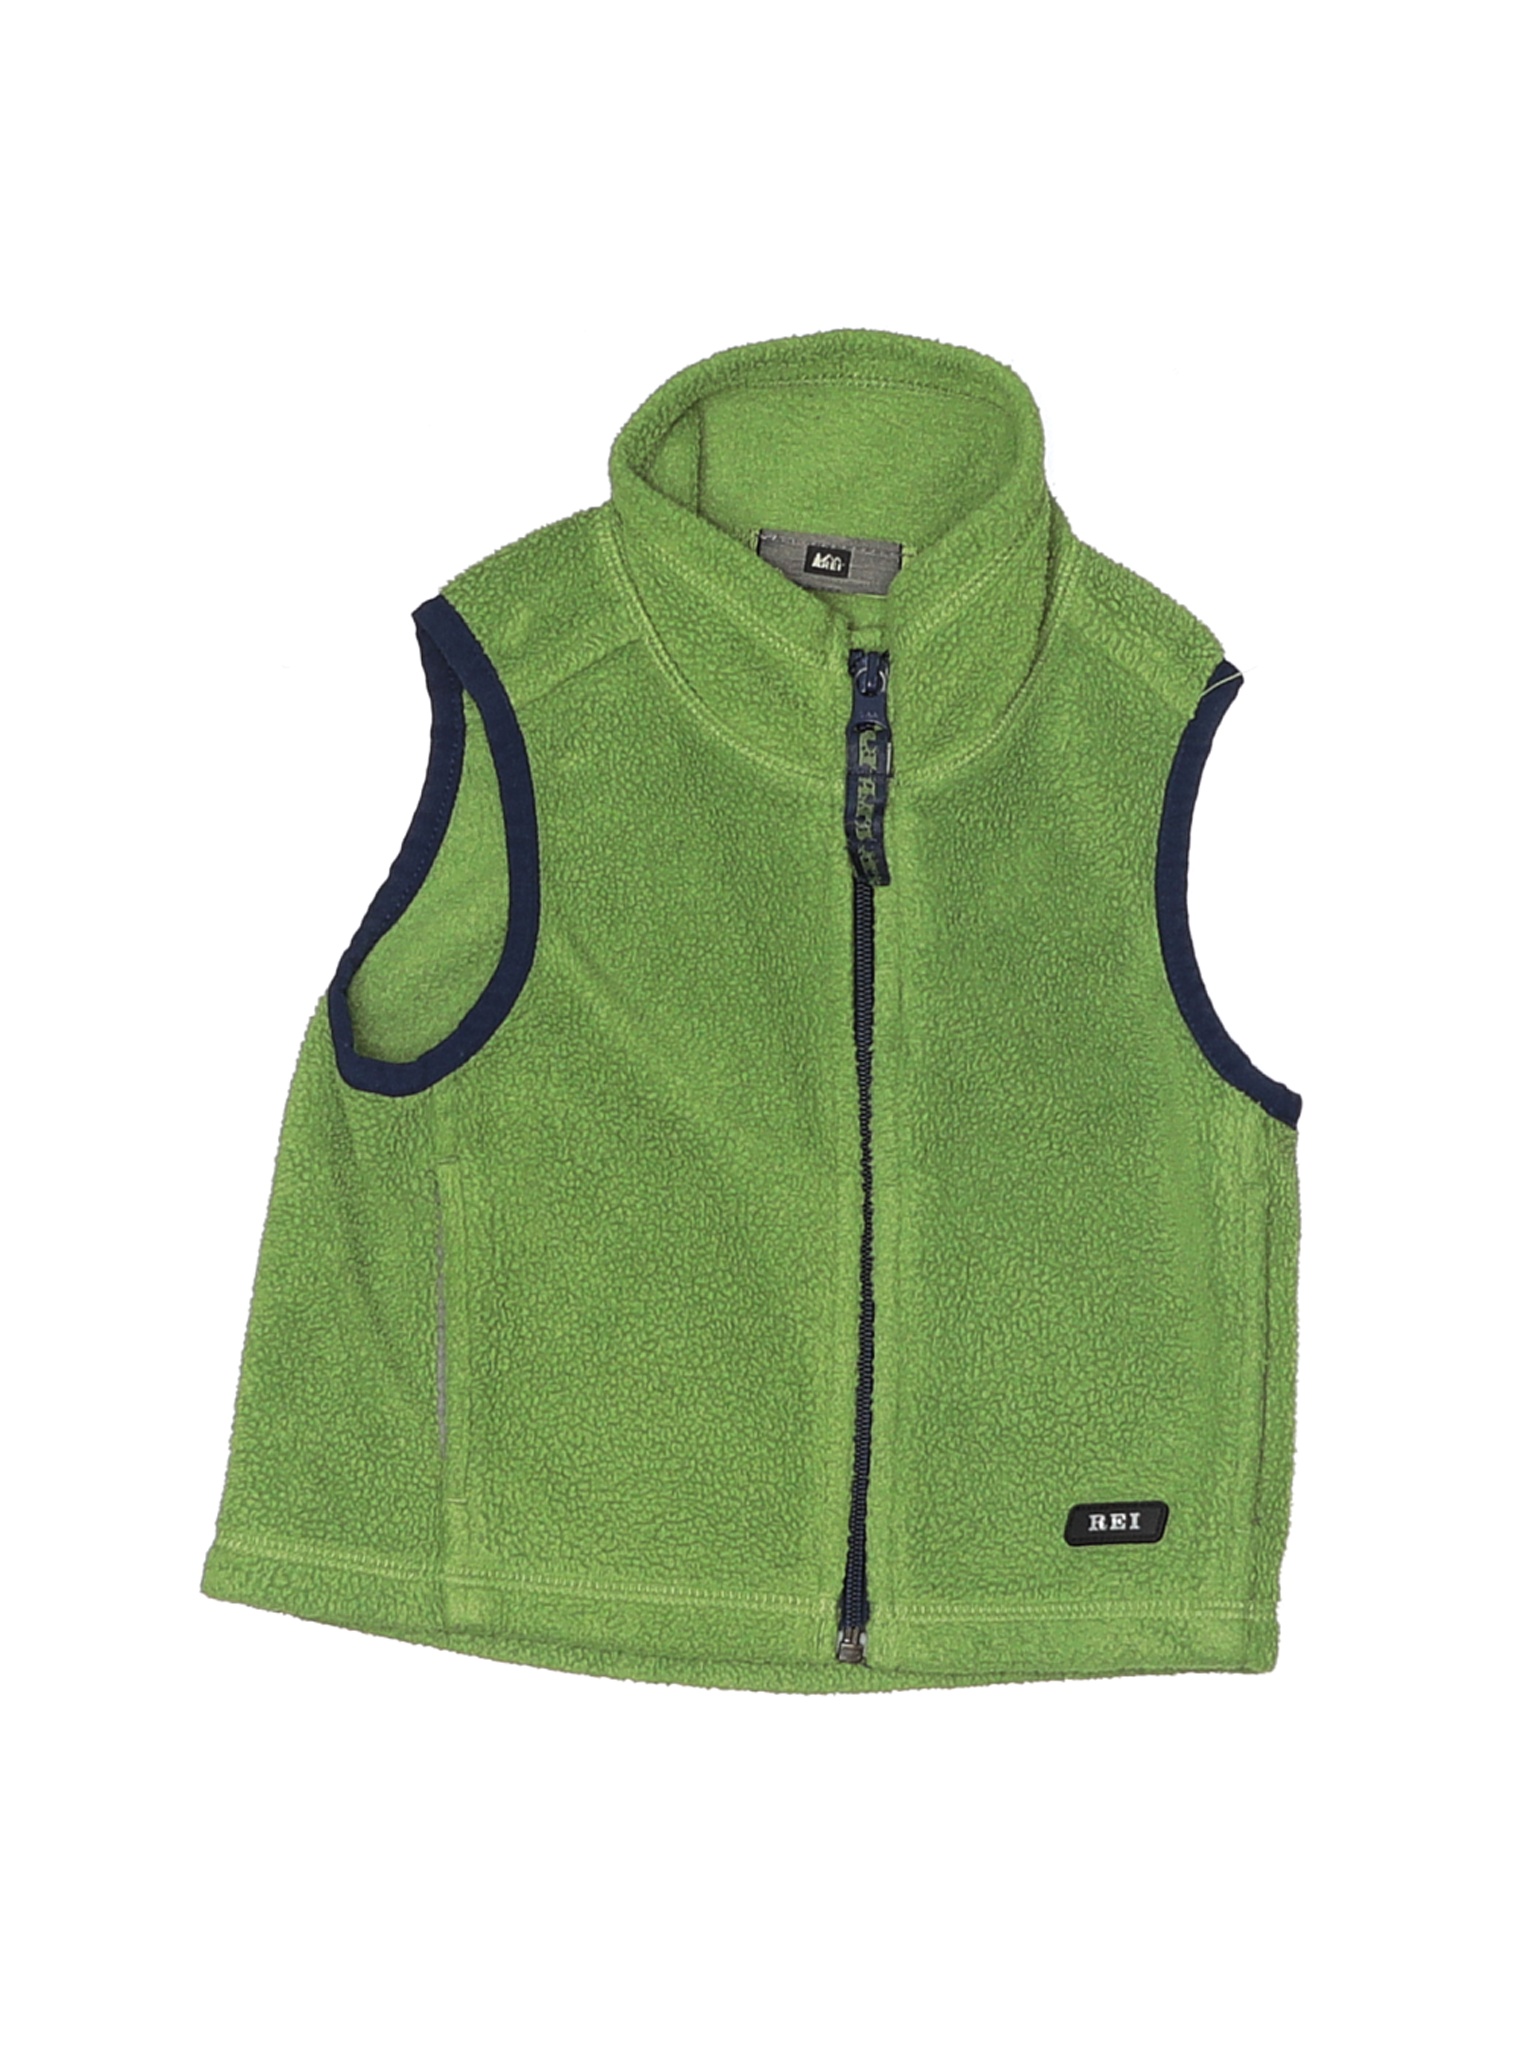 REI Boys Green Vest 2T | eBay